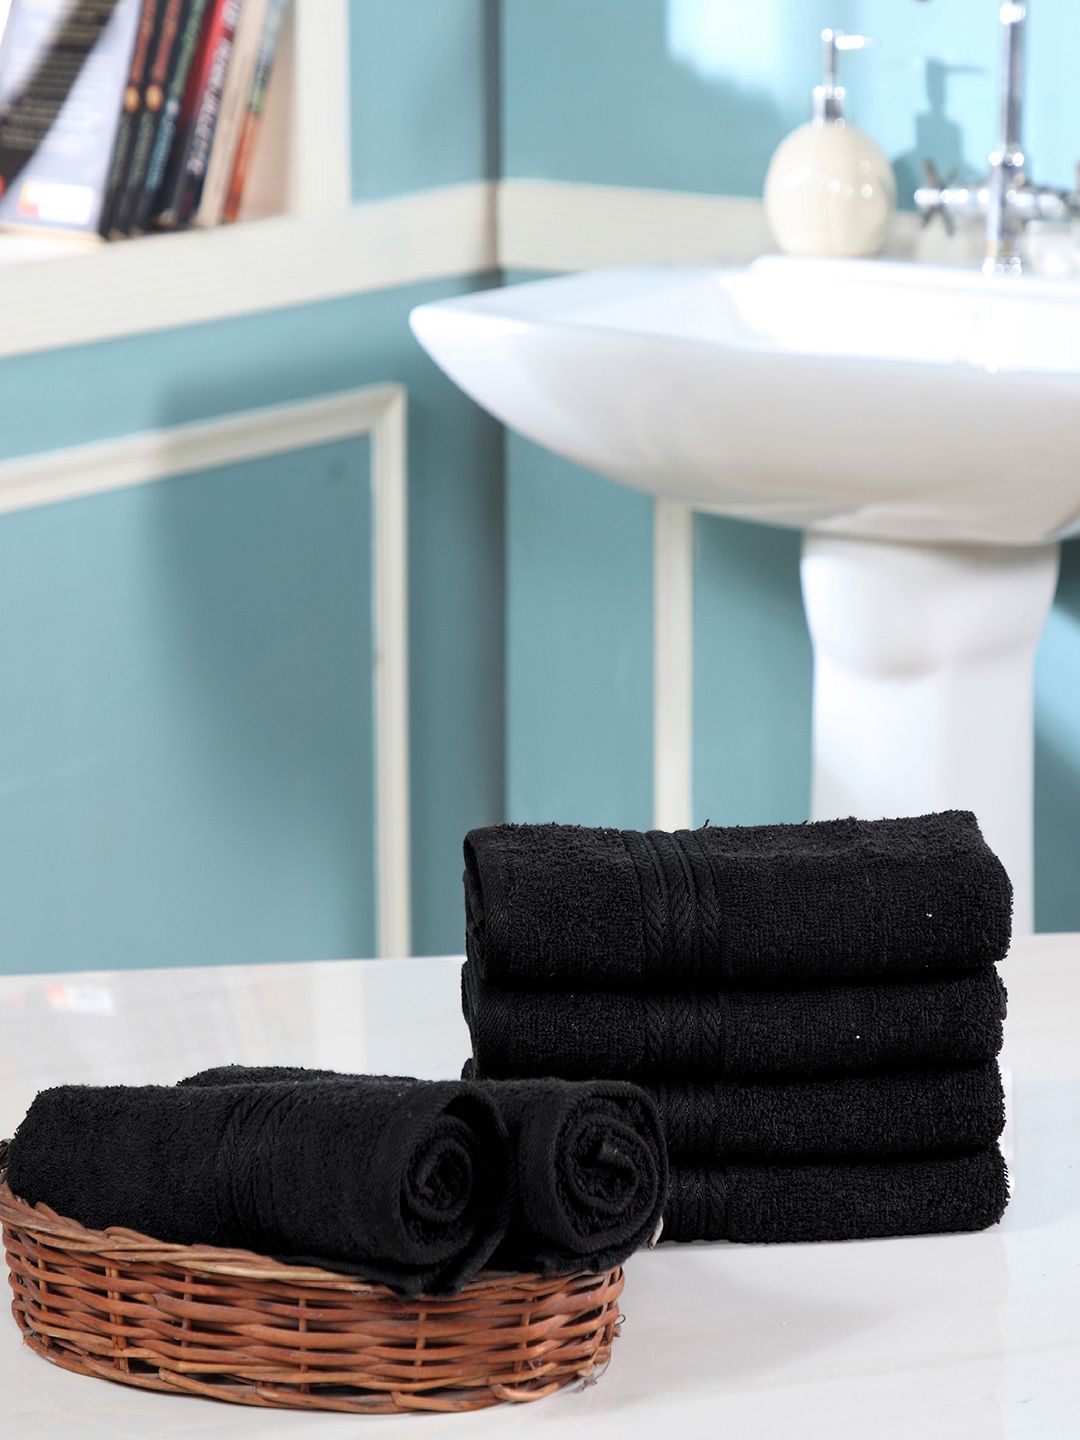 Avira Home Set Of 6 Hand Towels Price in India